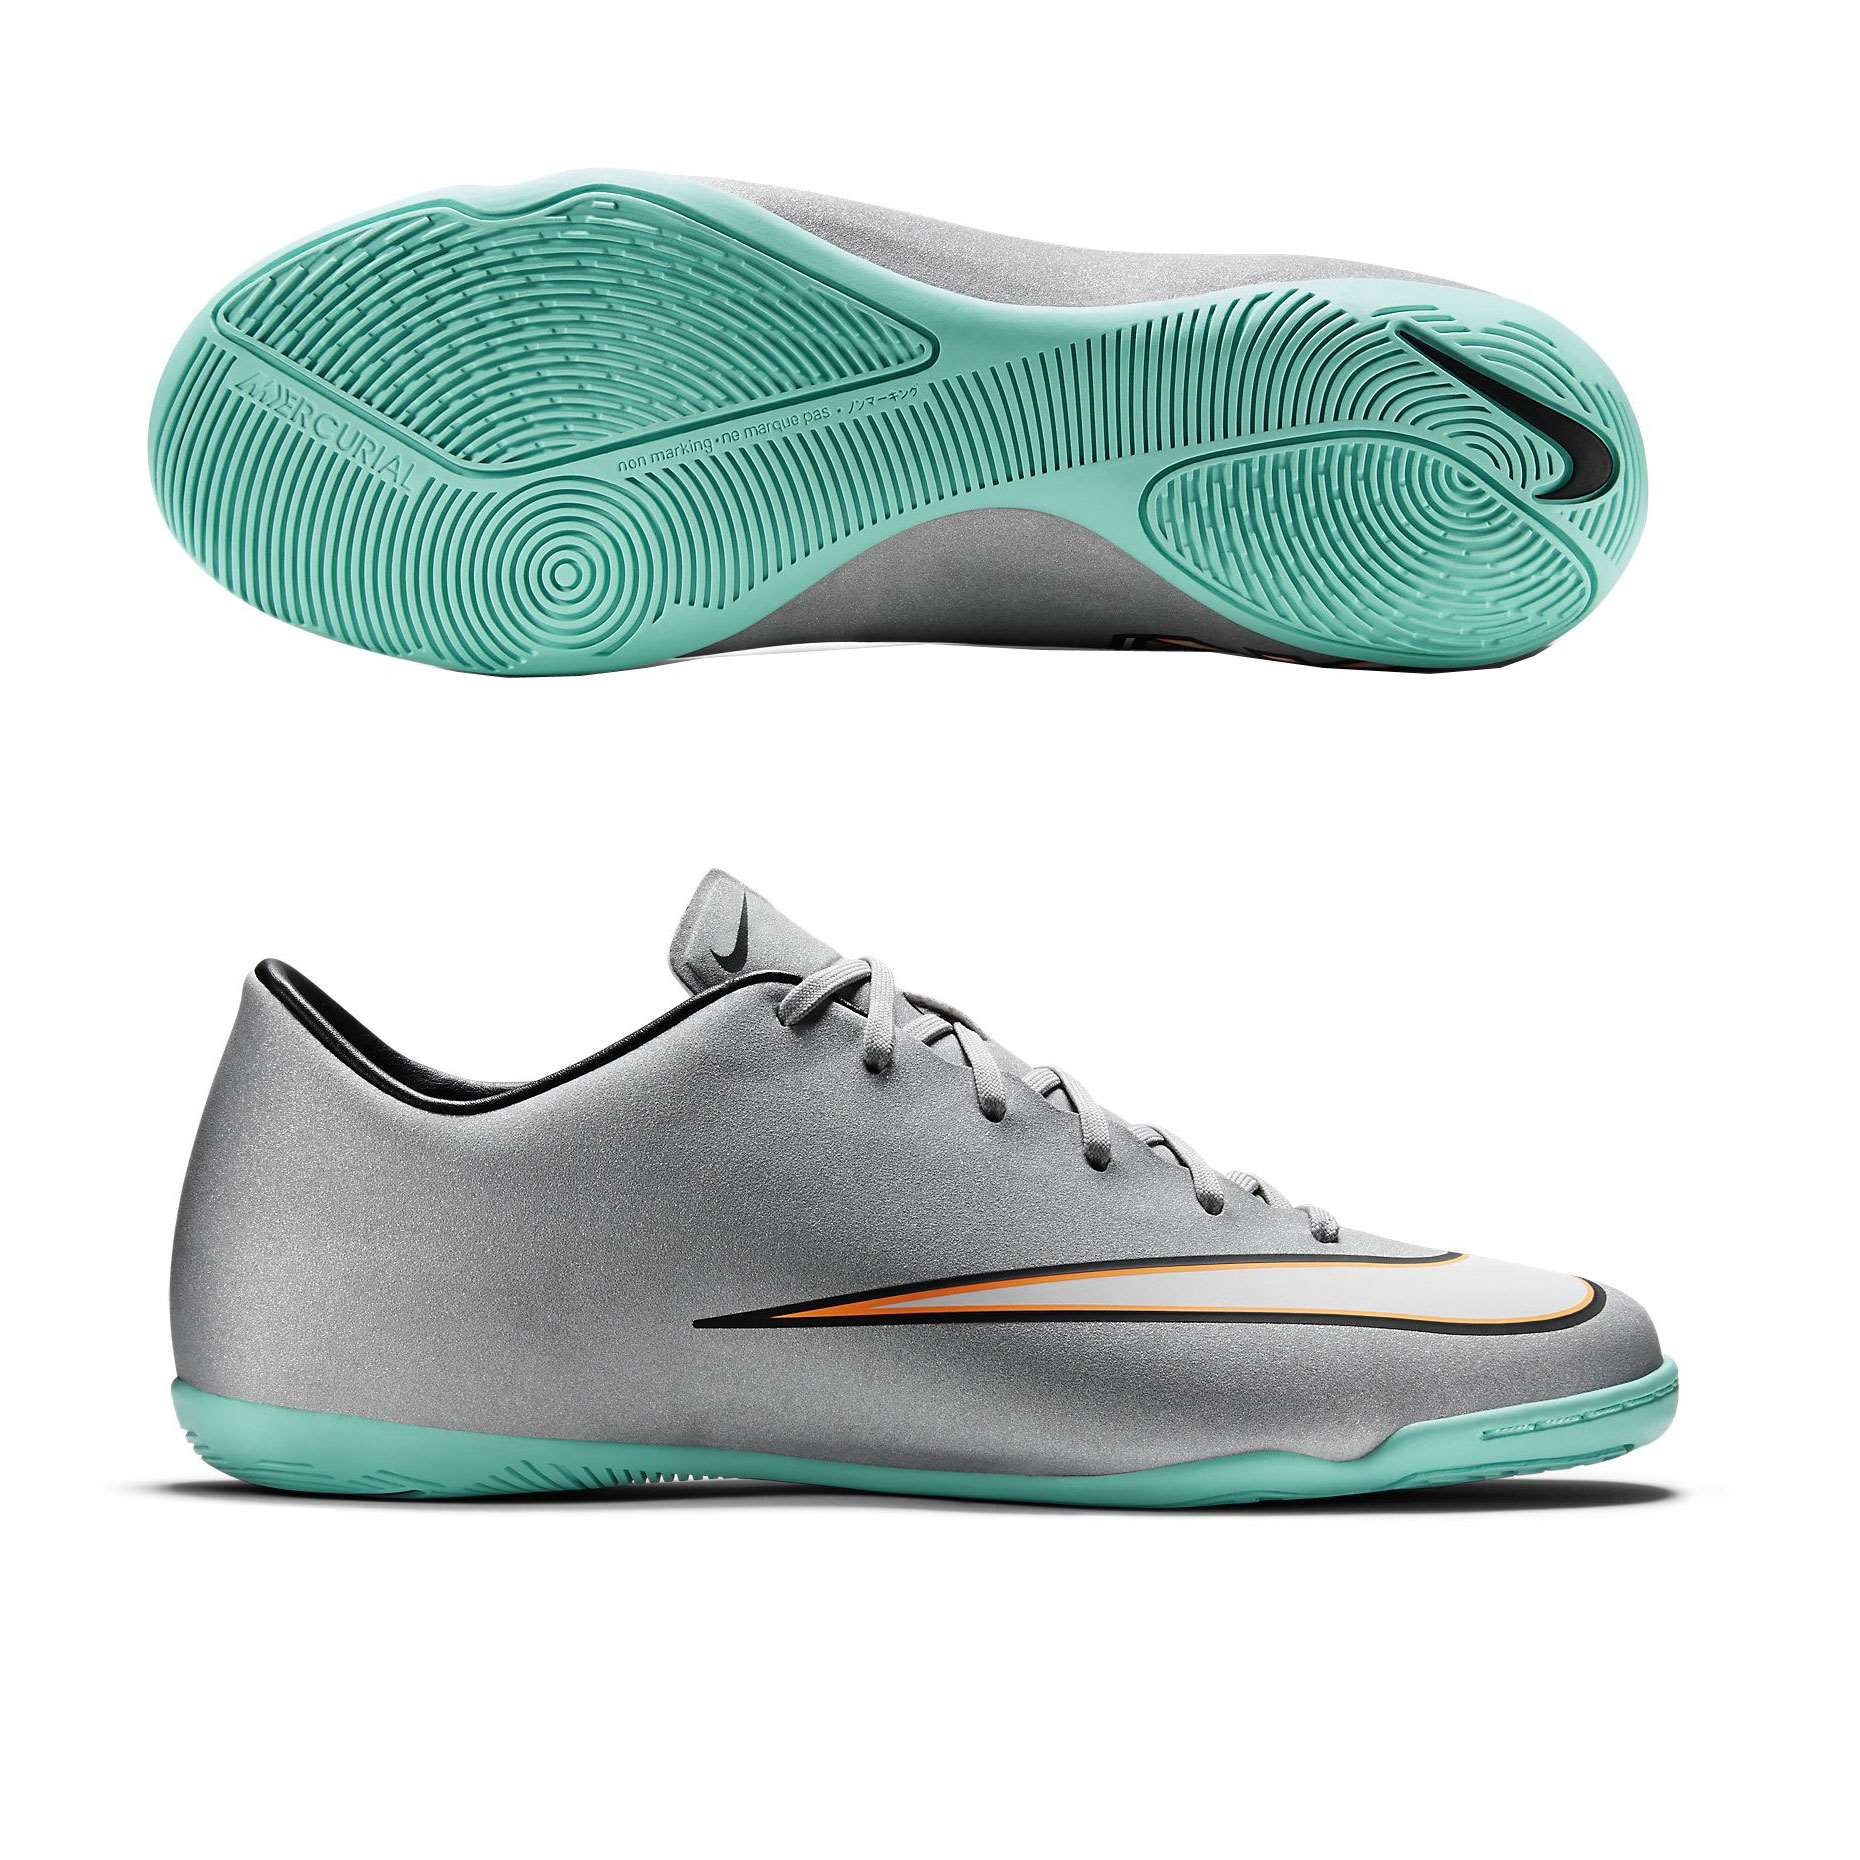  خرید  کفش فوتسال نایک مرکوریال 684875 - Nike mercurial CR7